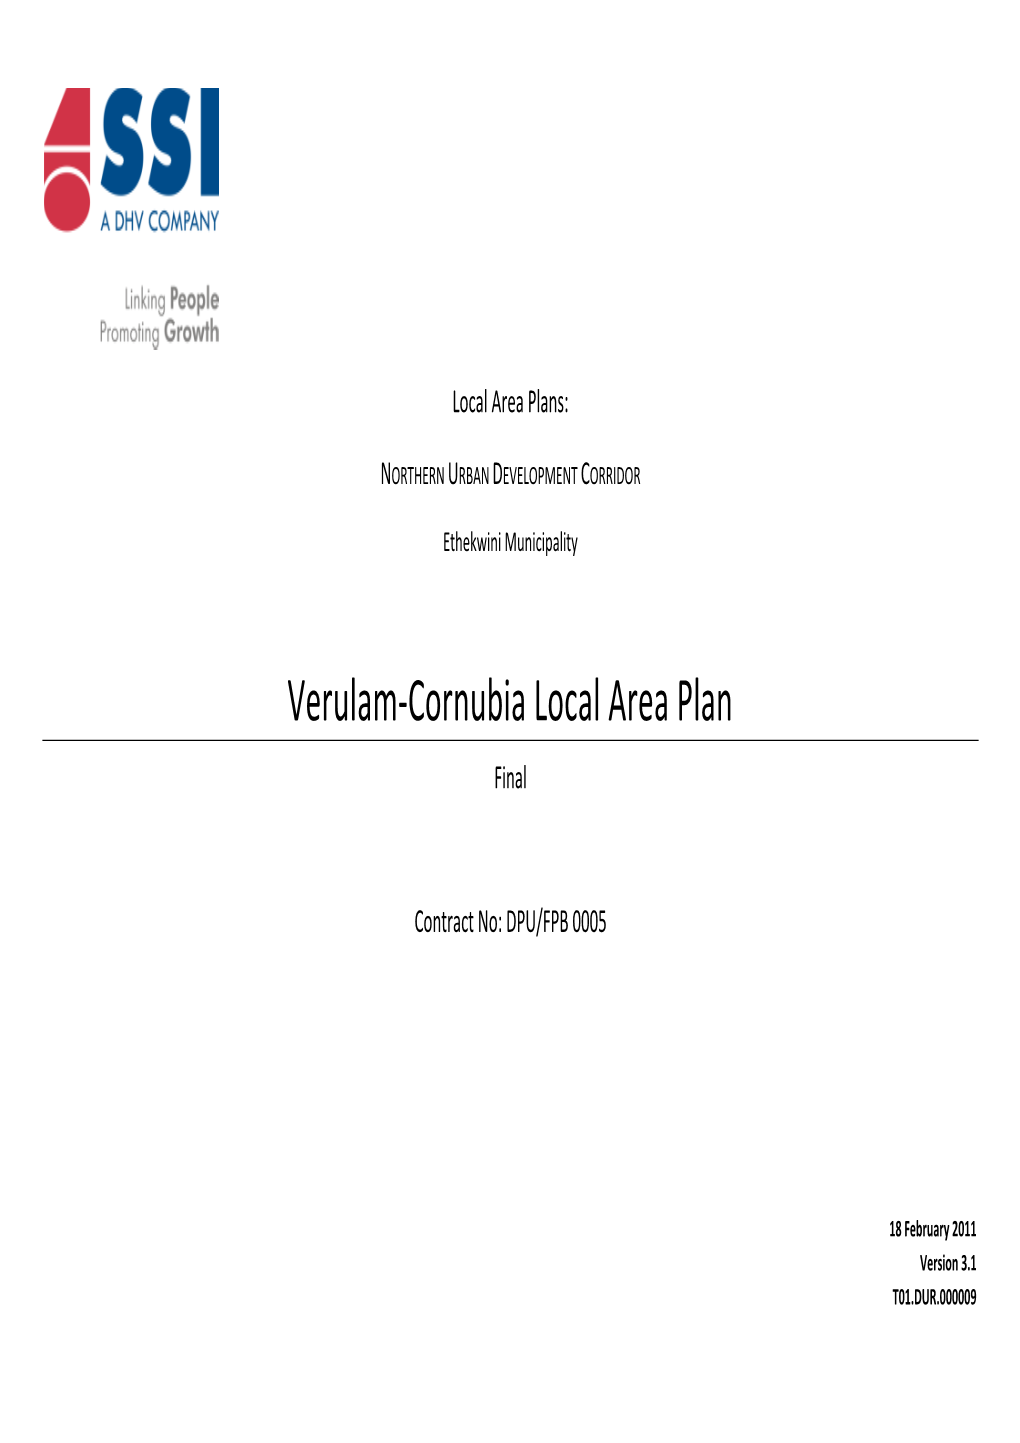 NUDC Verulam Cornubia LAP V3.1 Final 18